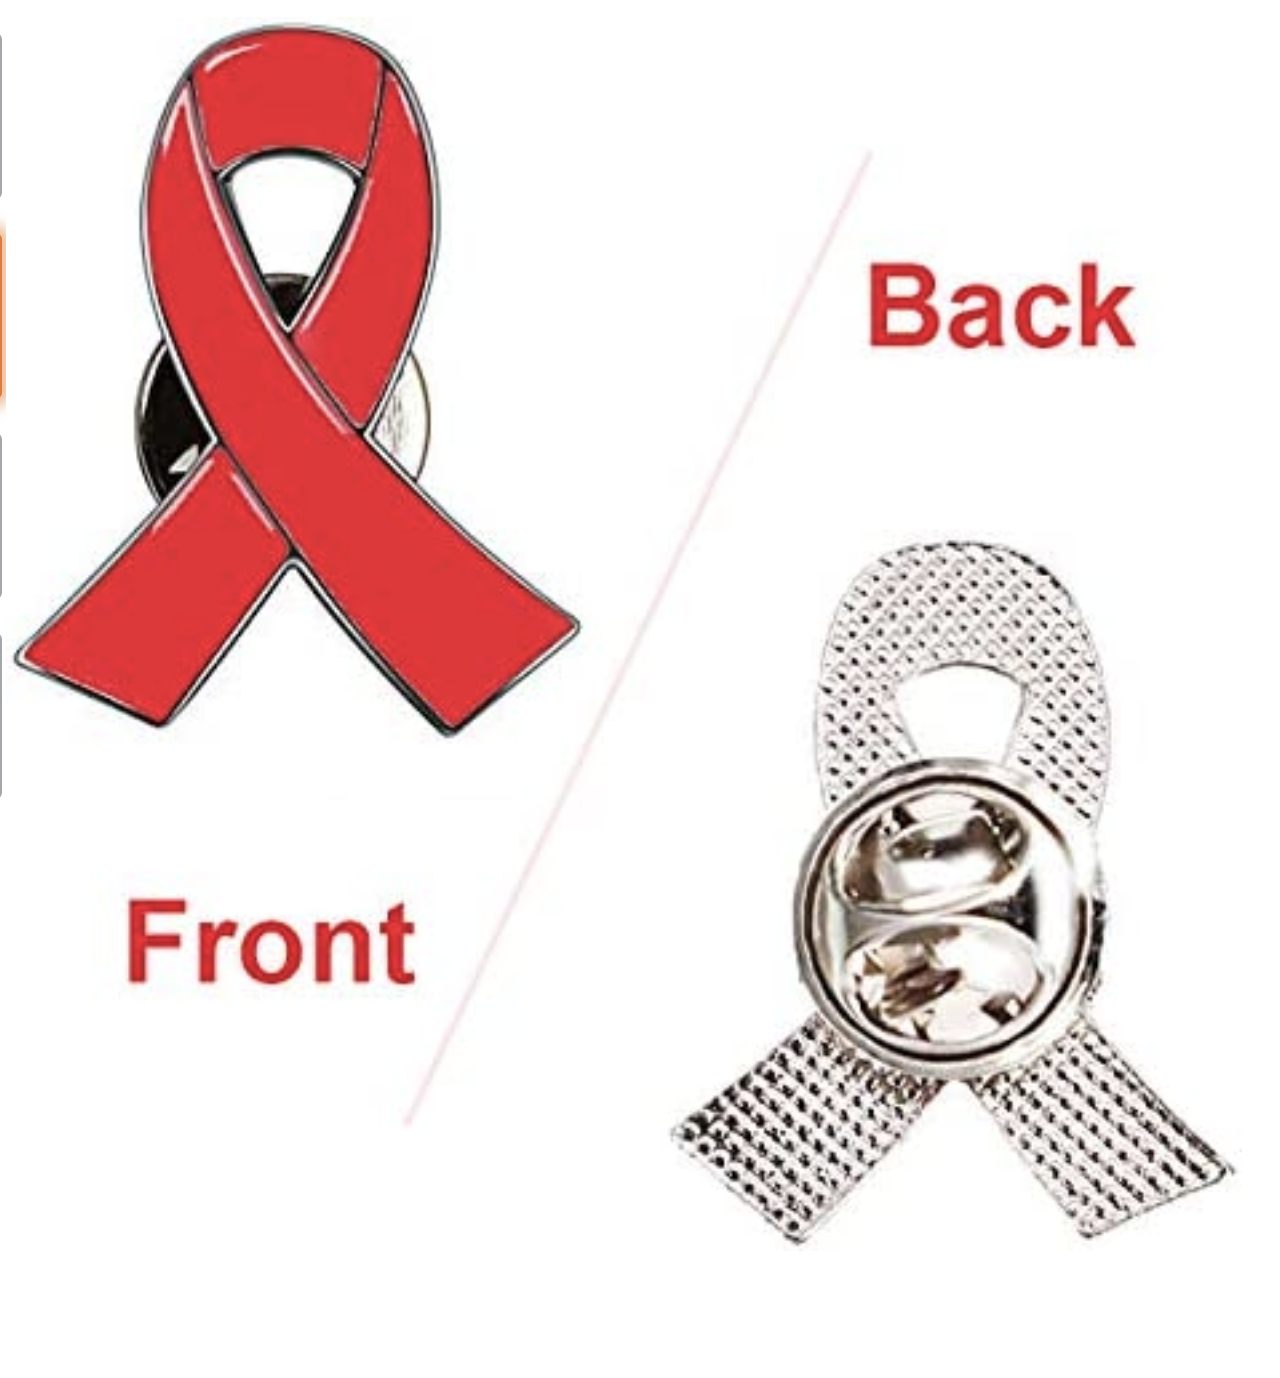 Pin lazo rojo apoyo a la lucha contra el VIH – Yukawaii